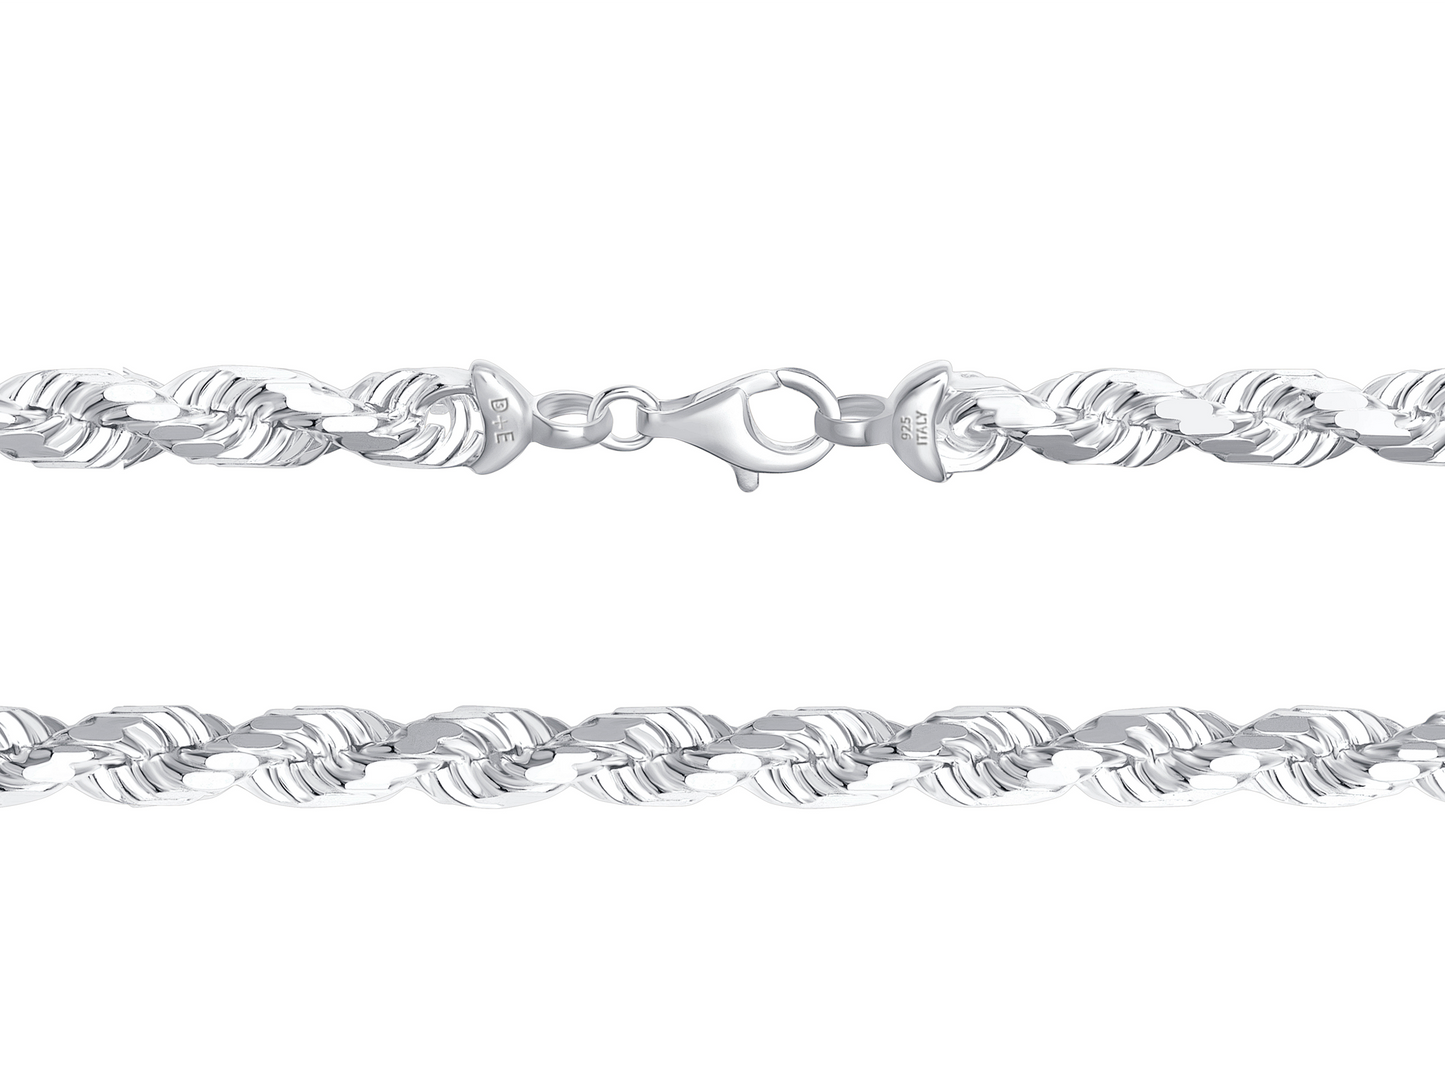 Silver 925 11 mm. Handmade Rope Diamond Cut Chain. ROPE195